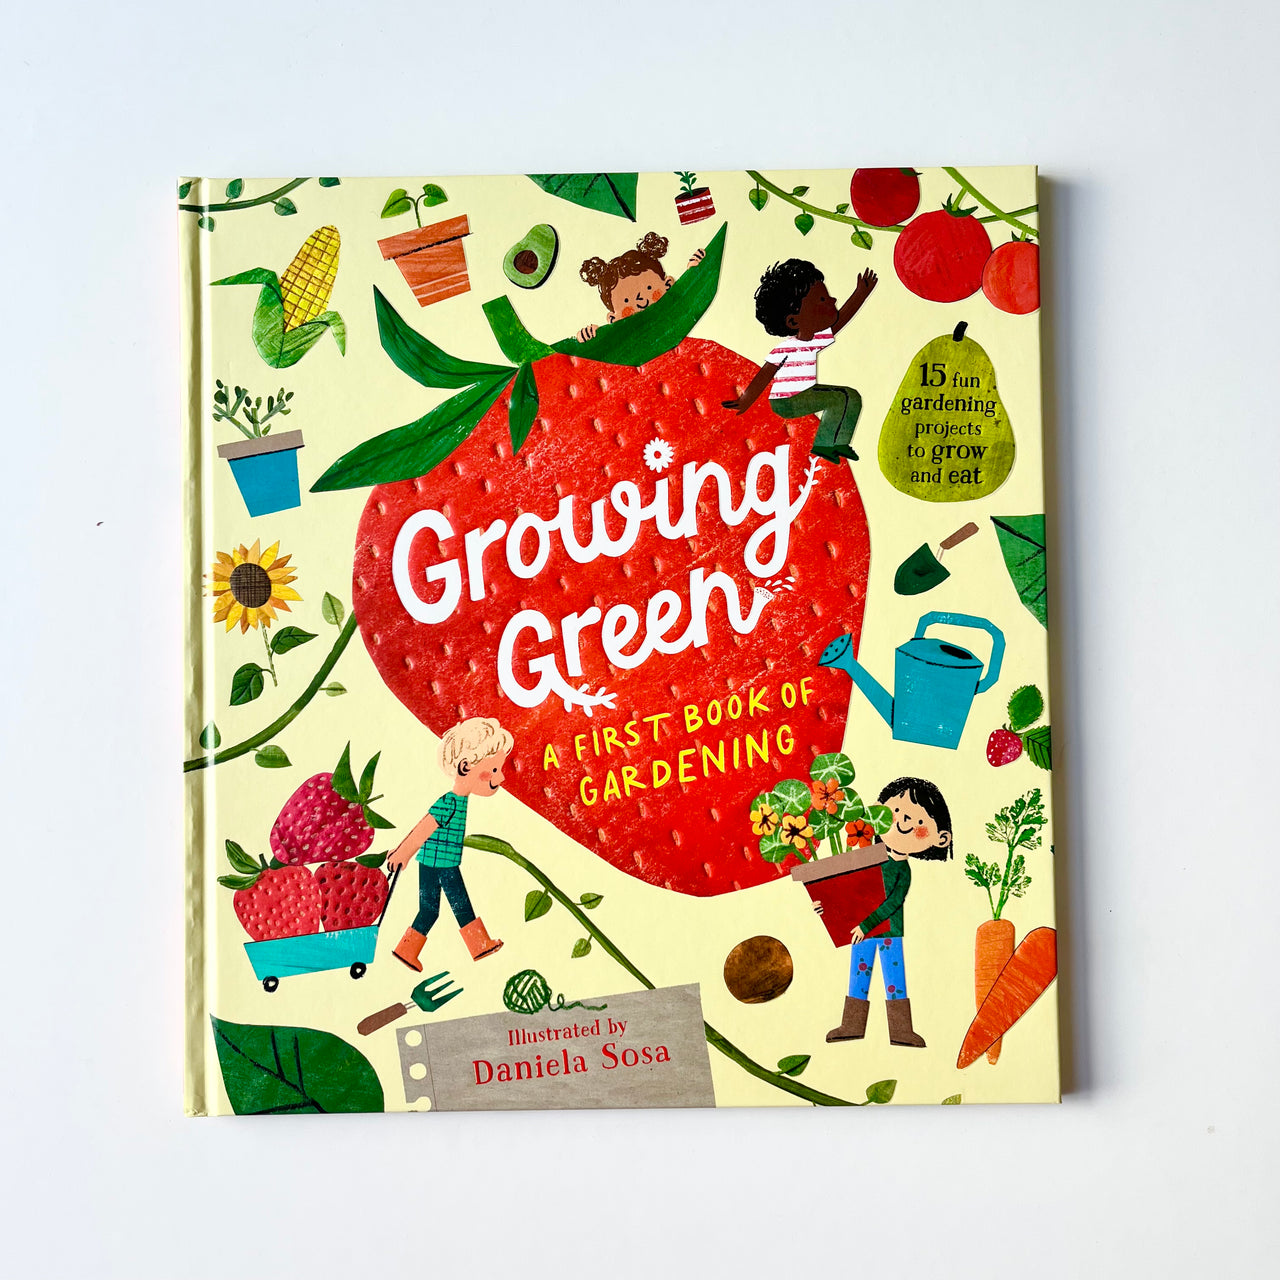 Growing Green-A First Book of Gardening. Australian Art Prints and Homewares. Green Door Decor. www.greendoordecor.com.au